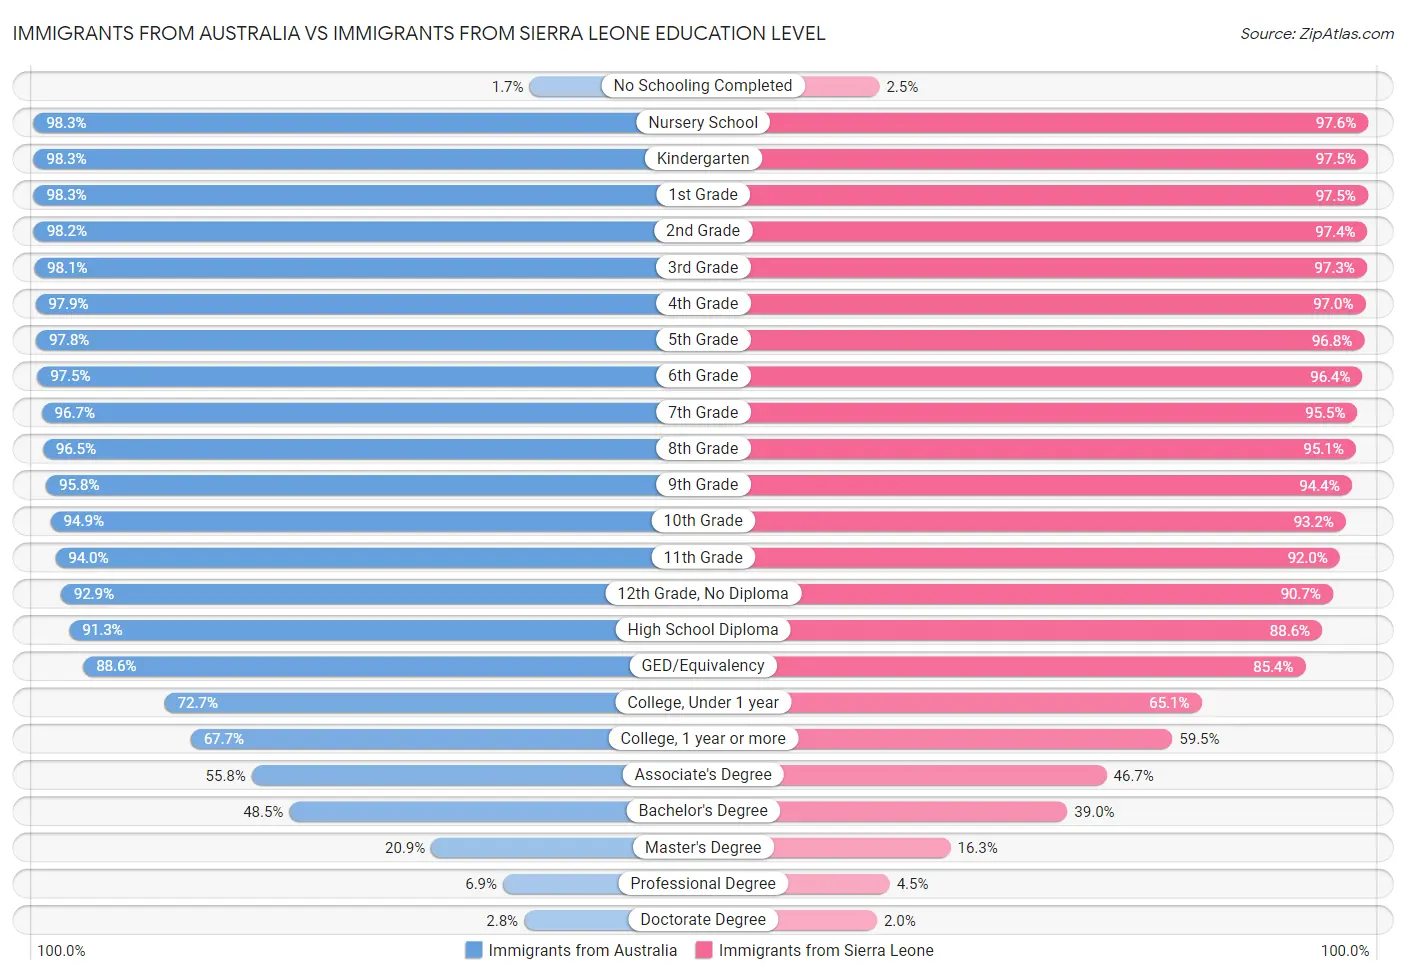 Immigrants from Australia vs Immigrants from Sierra Leone Education Level